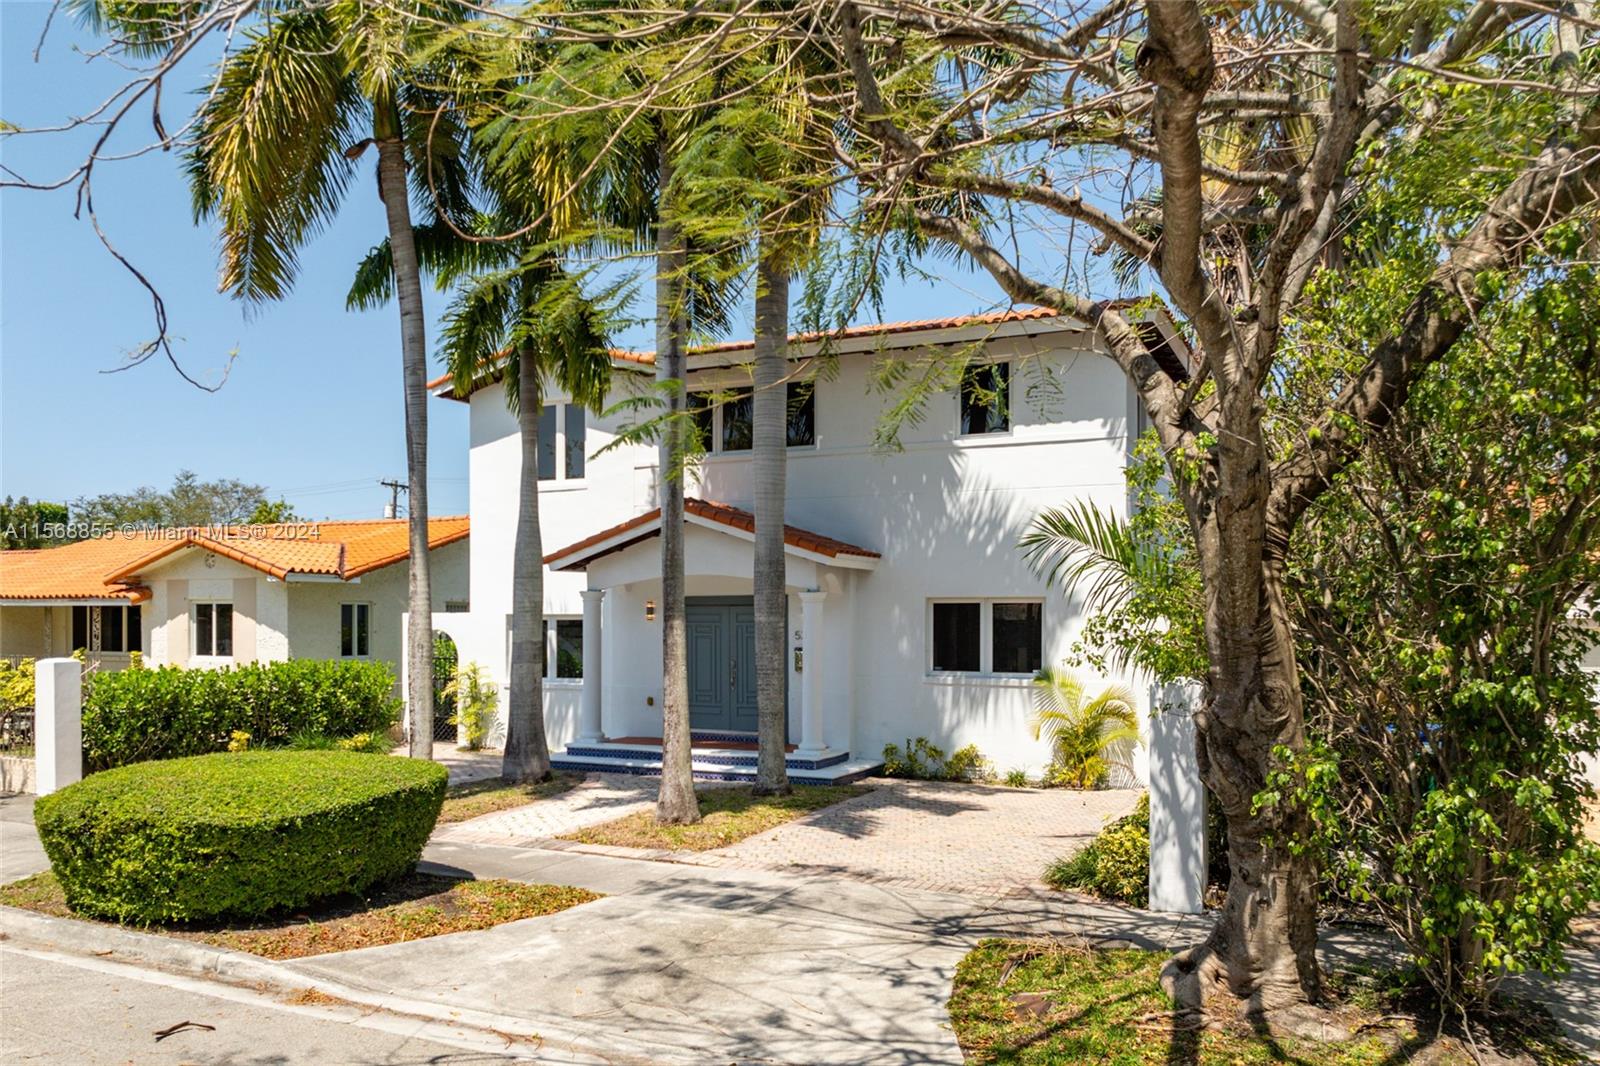 Rental Property at 527 Sw 20th Rd, Miami, Broward County, Florida - Bedrooms: 6 
Bathrooms: 4  - $10,000 MO.